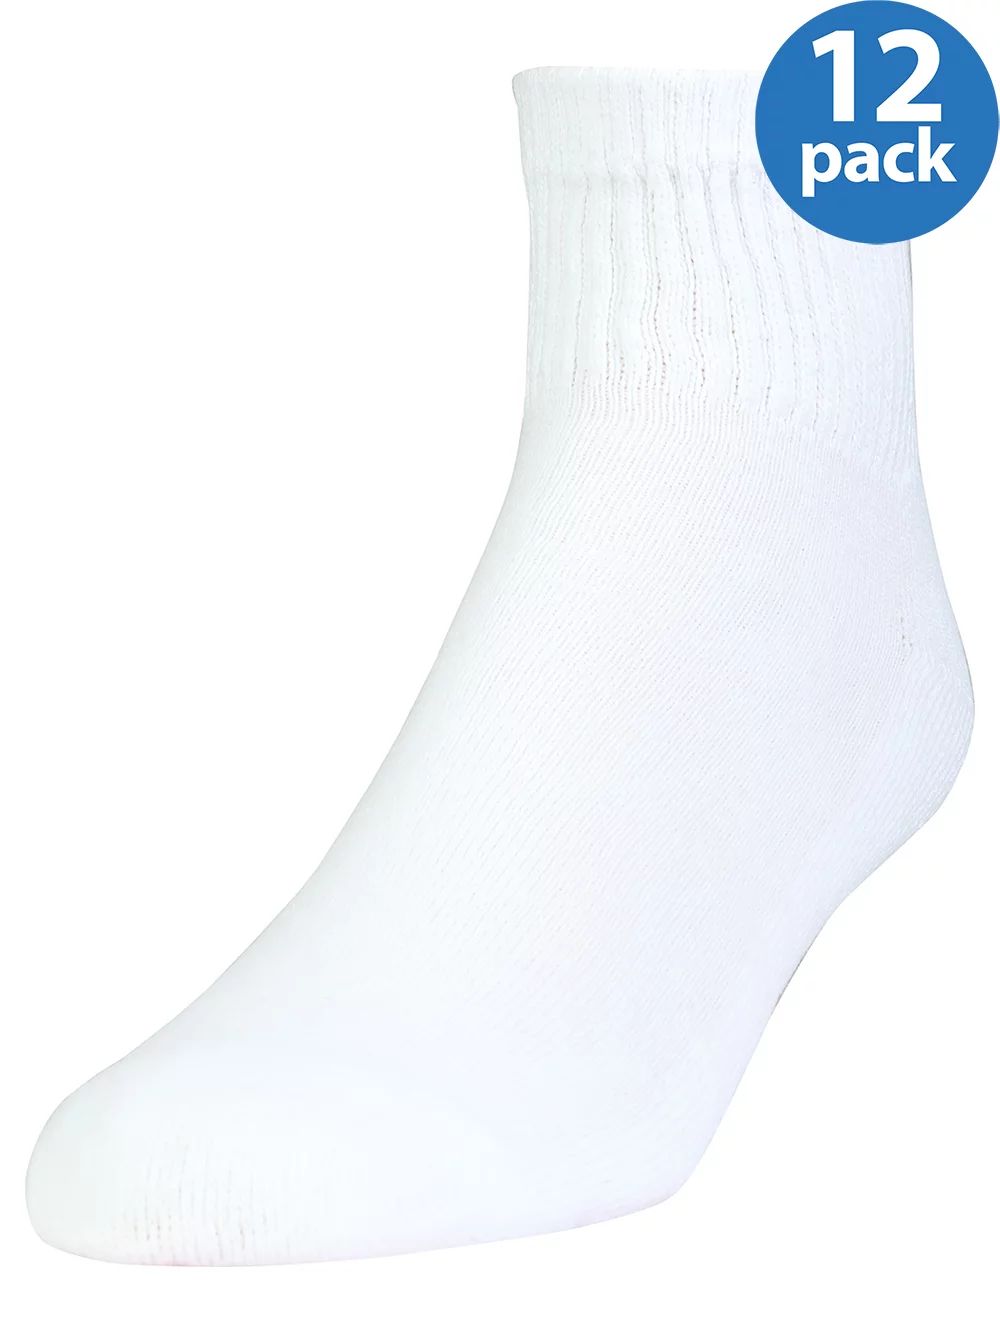 Gildan Men's Performance Cotton moveFX Ankle Socks 12-Pack | Walmart (US)